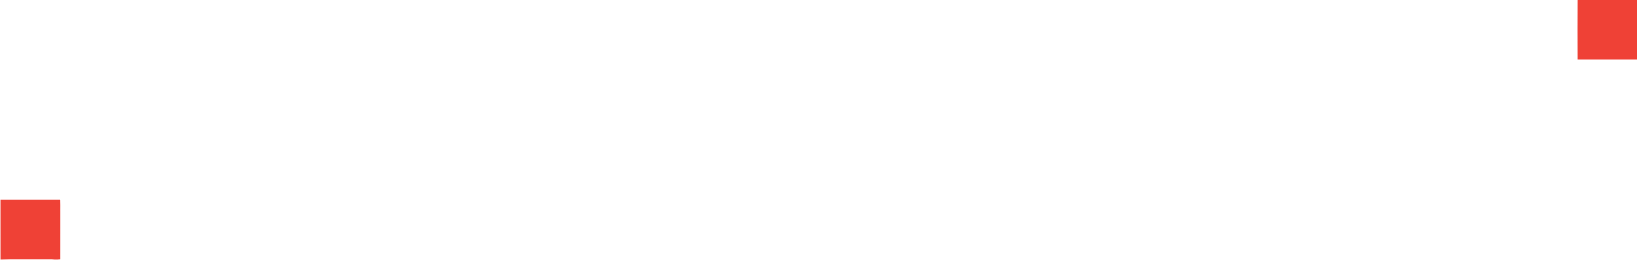 Delhivery logo large for dark backgrounds (transparent PNG)